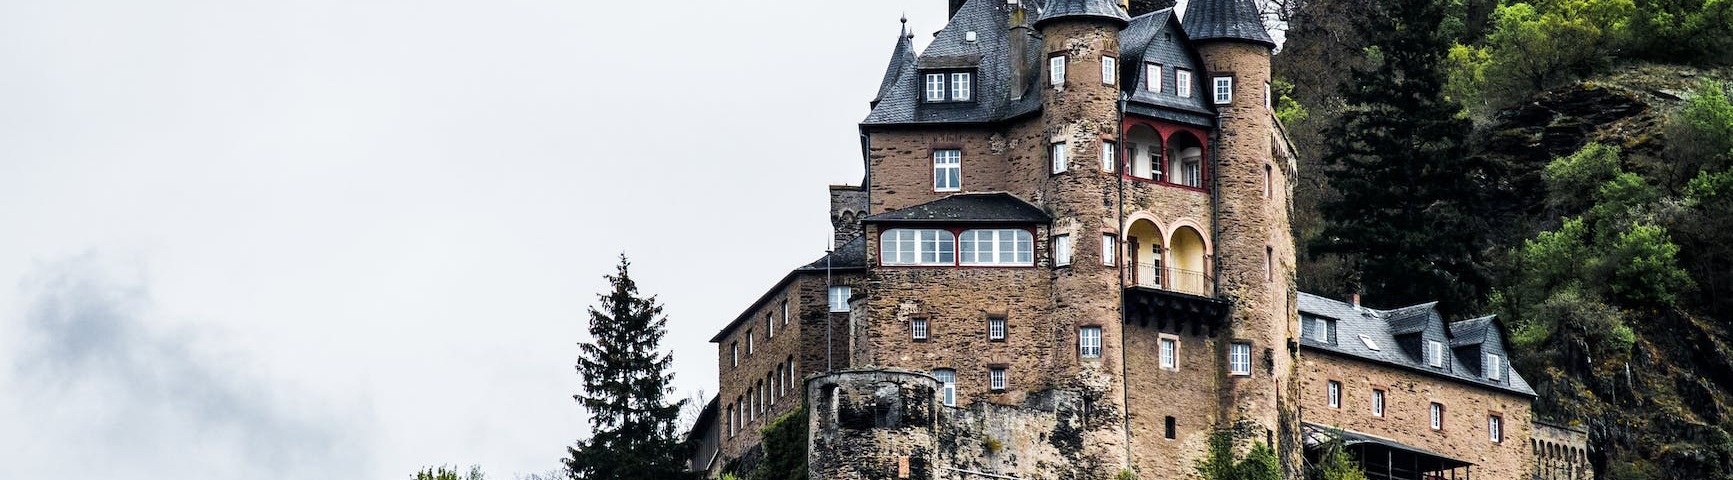 katz castle in sankt goarshausen germany